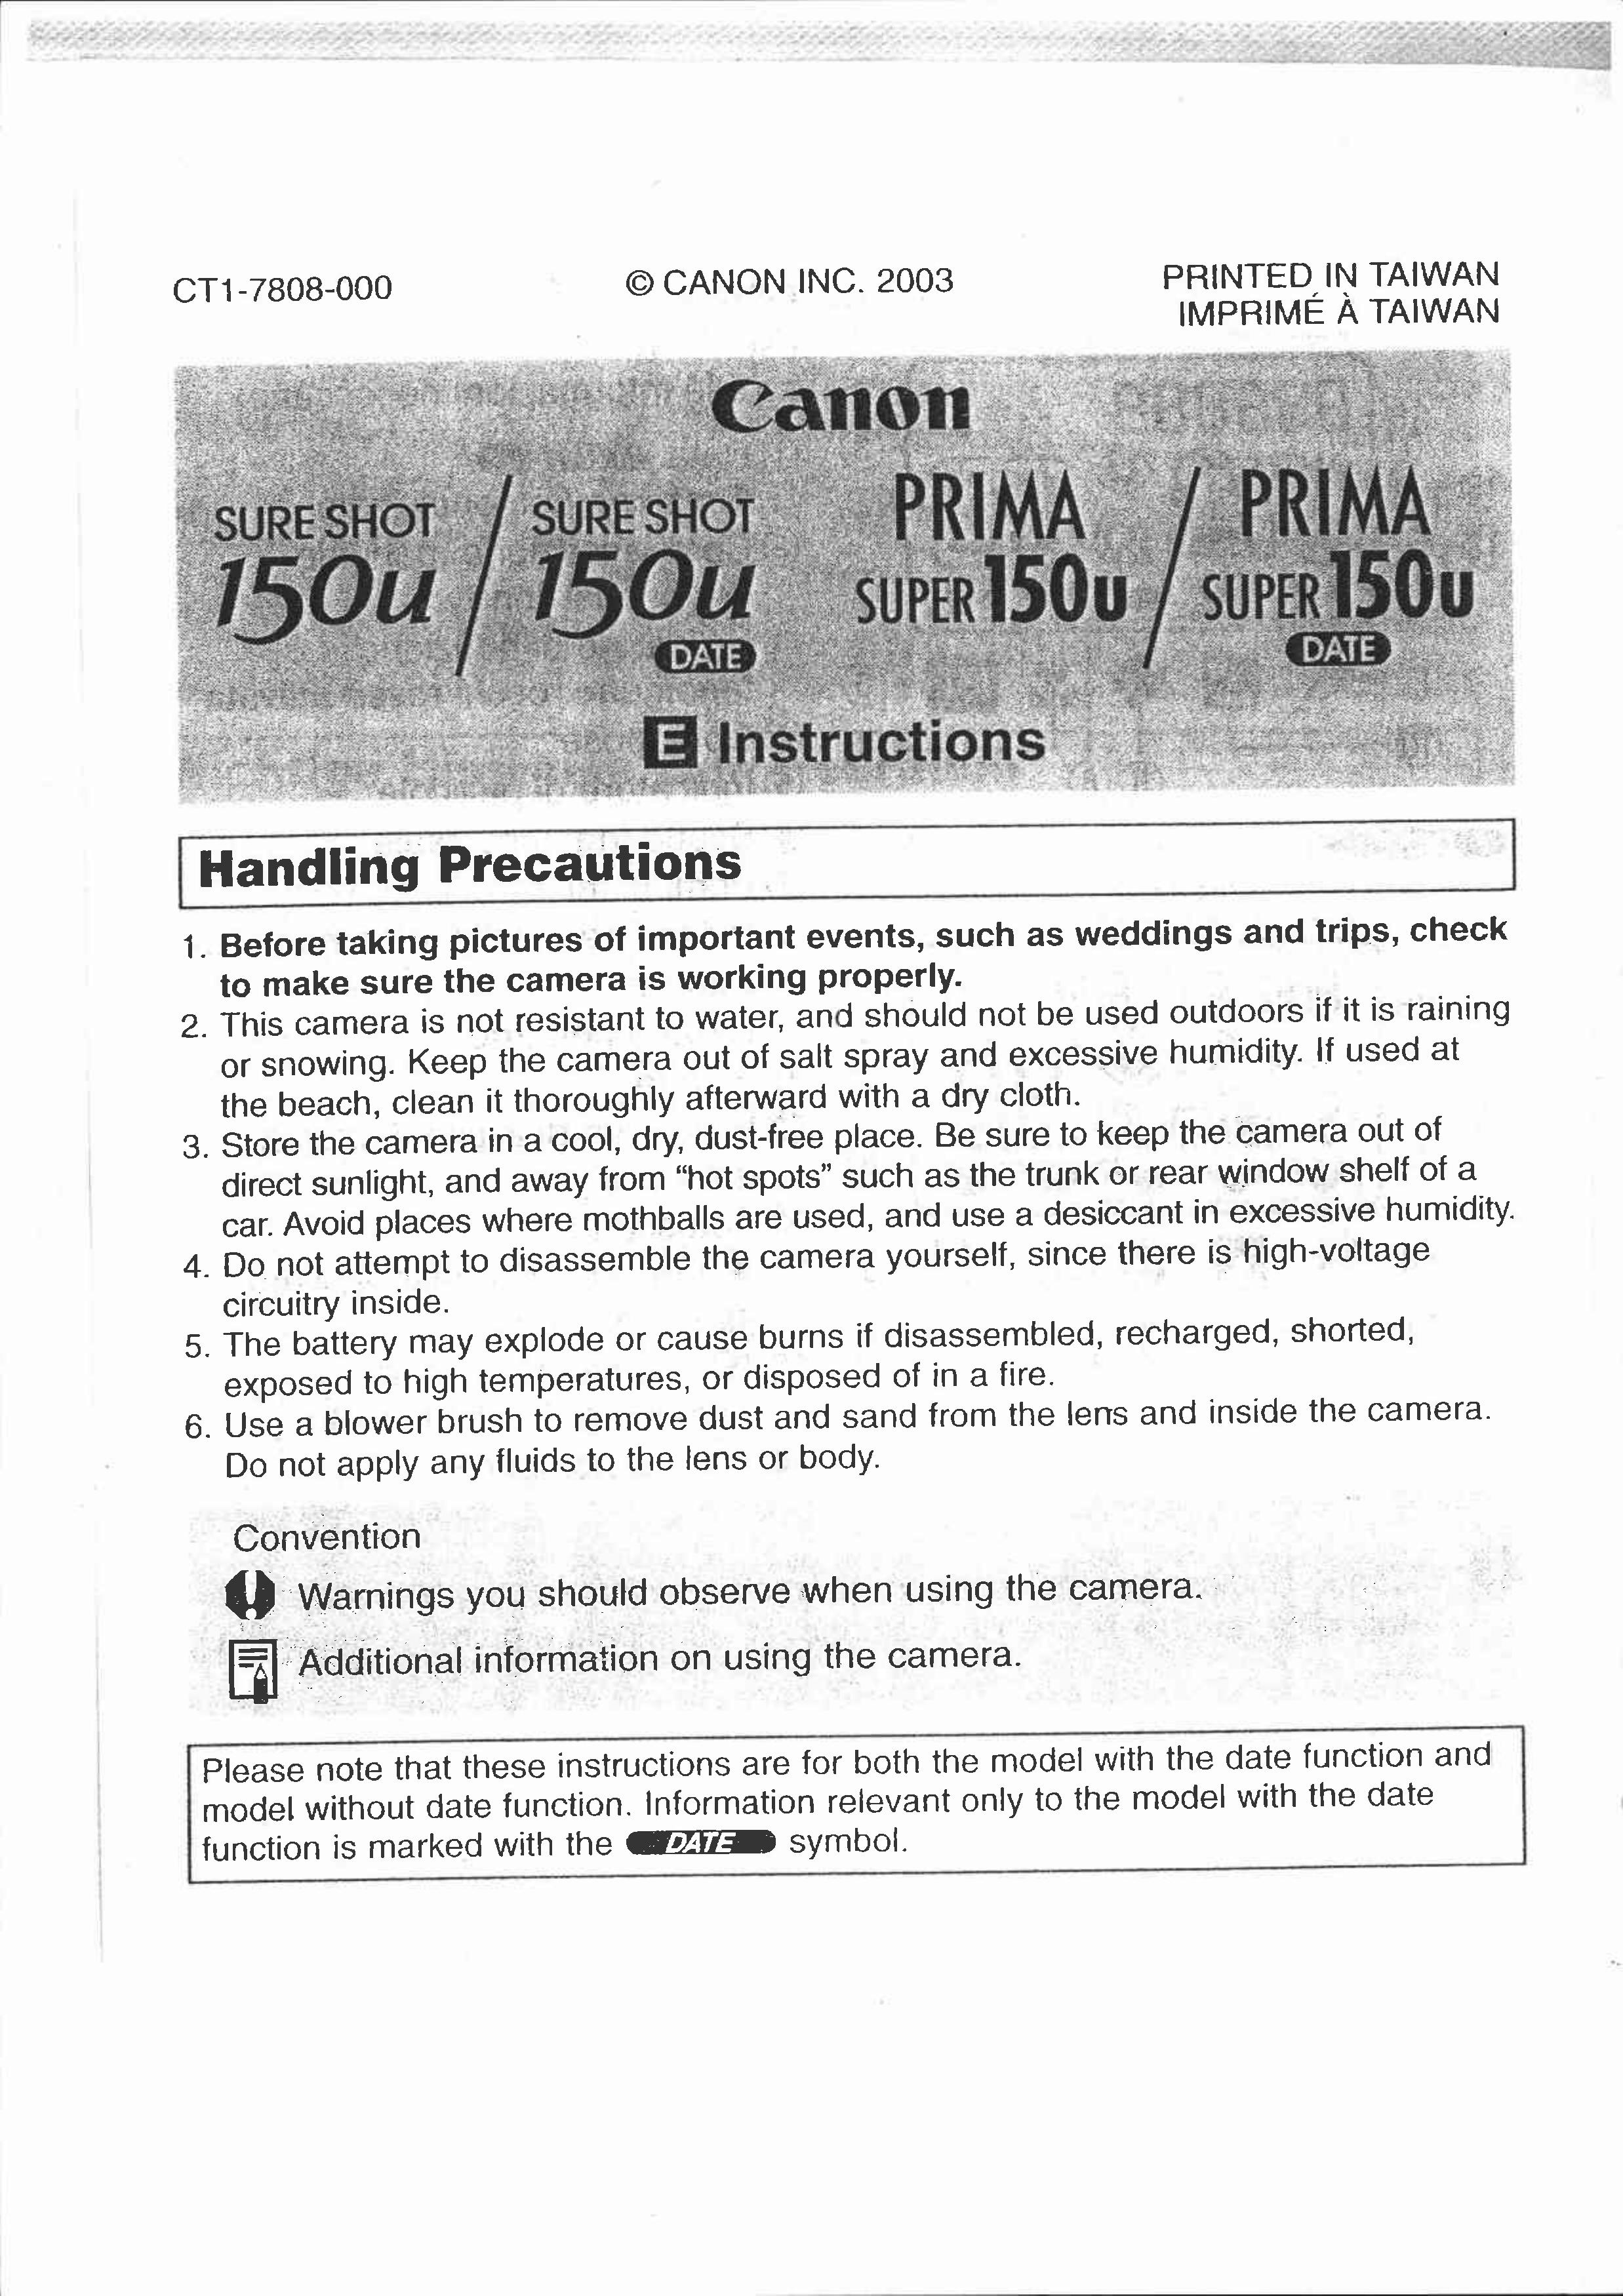 Canon 150U DATE Camcorder User Manual